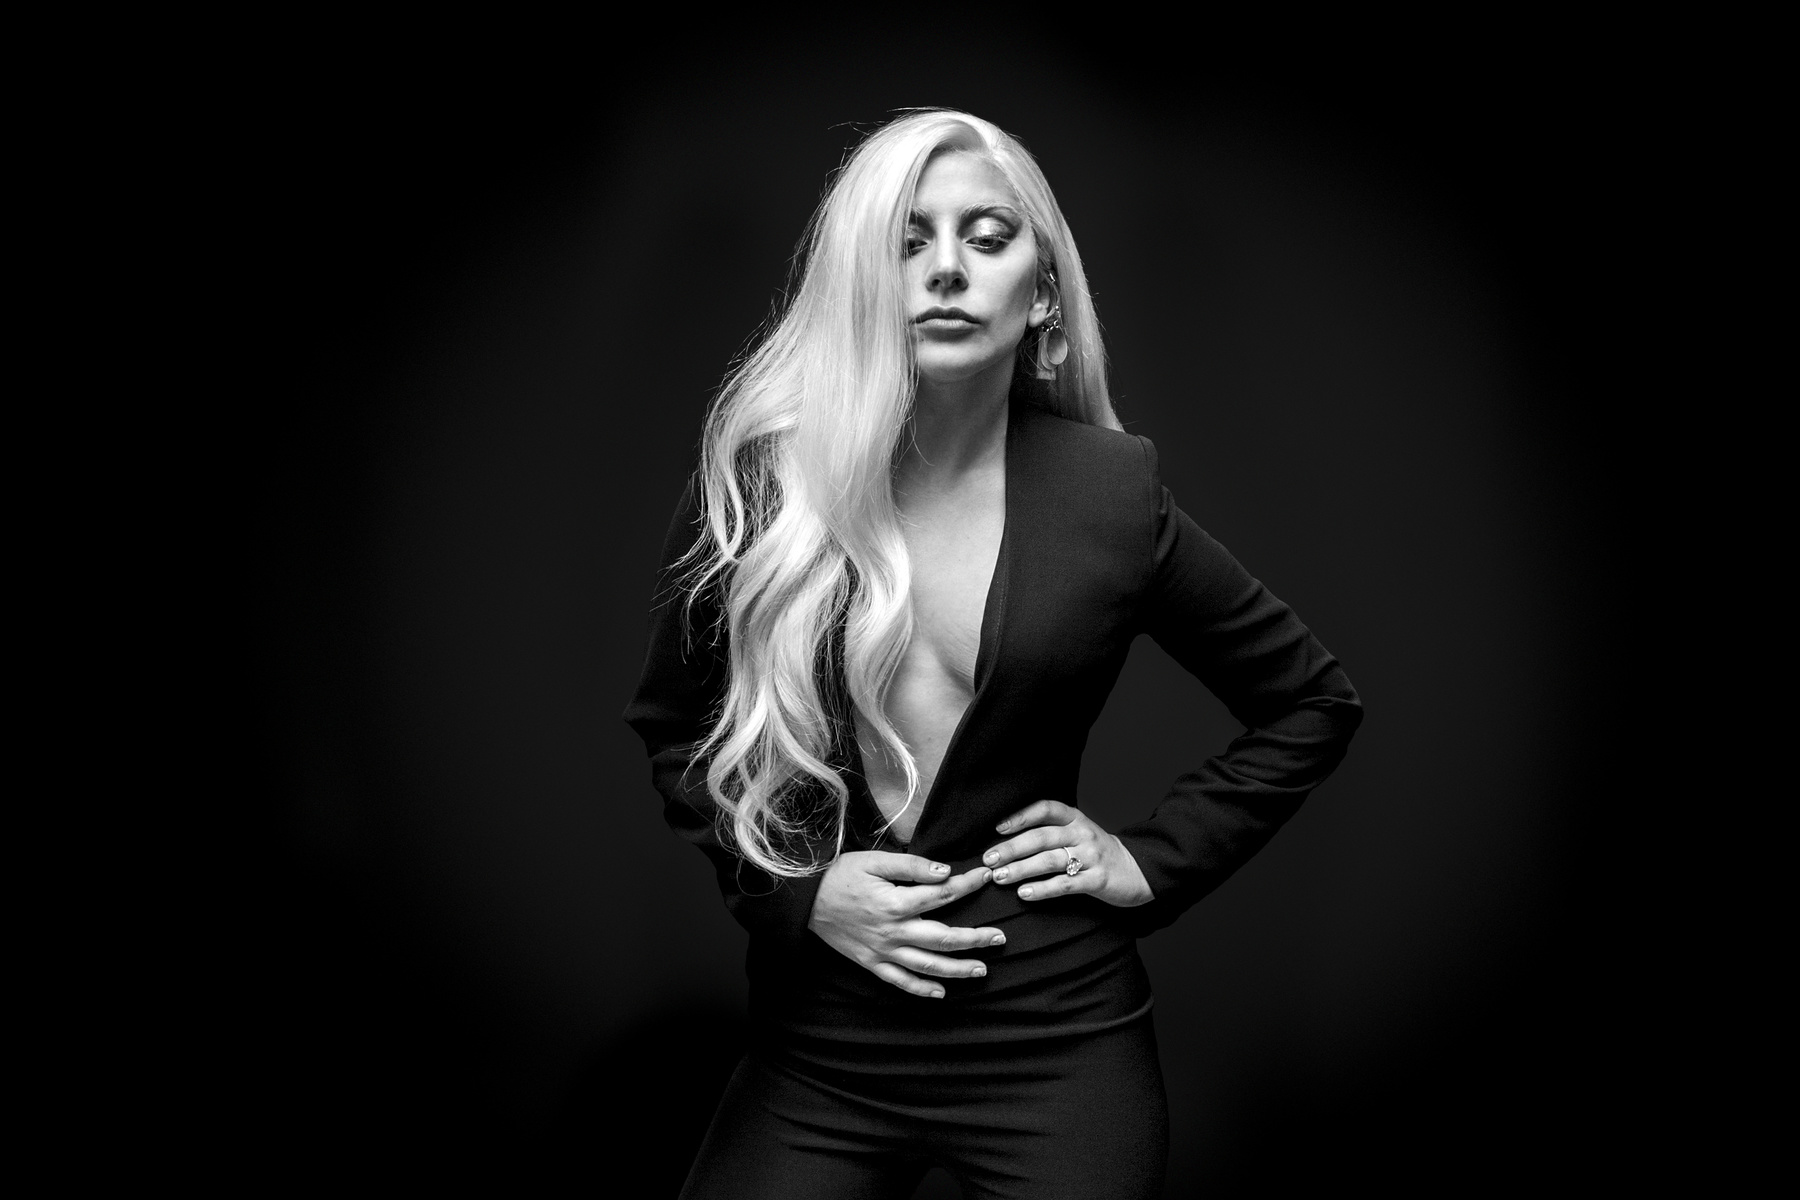 Lady Gaga by Chris Klemens